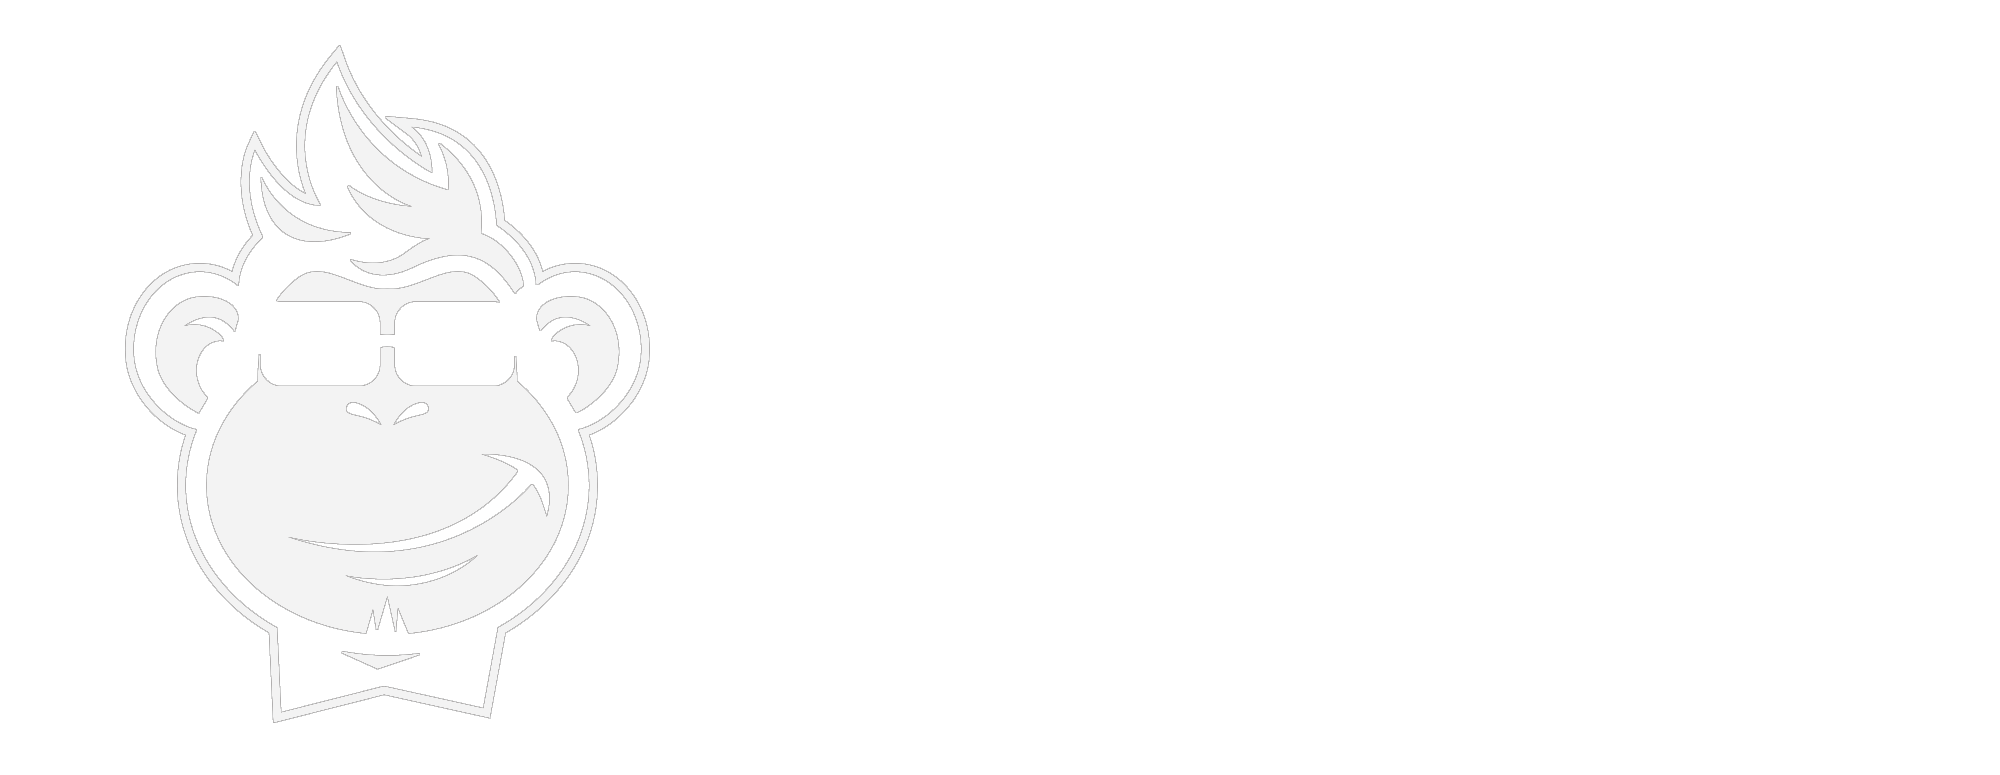 ITMONKEE Gets a Facelift